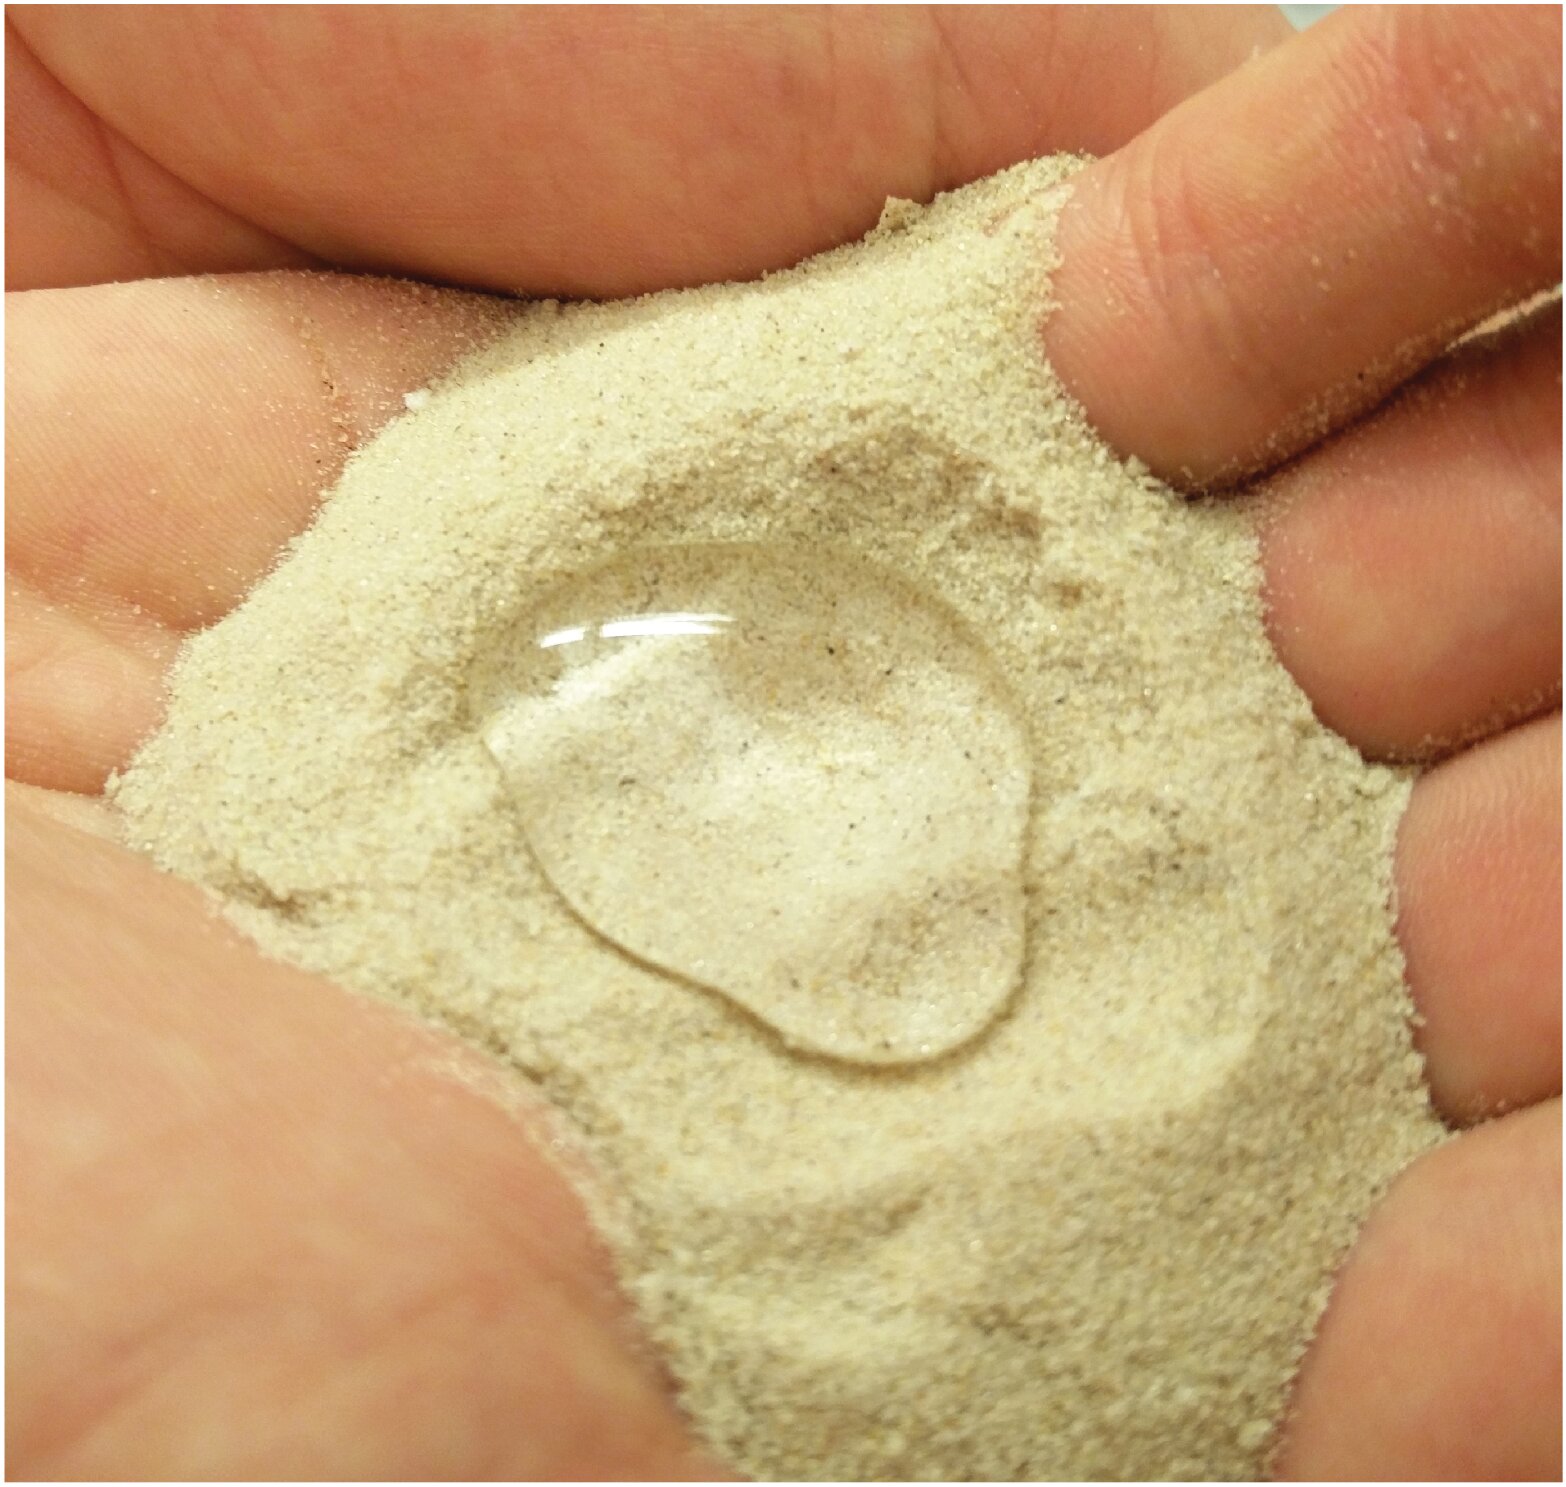 Wax-Coated Sand Improves Crop Yields in Arid Regions